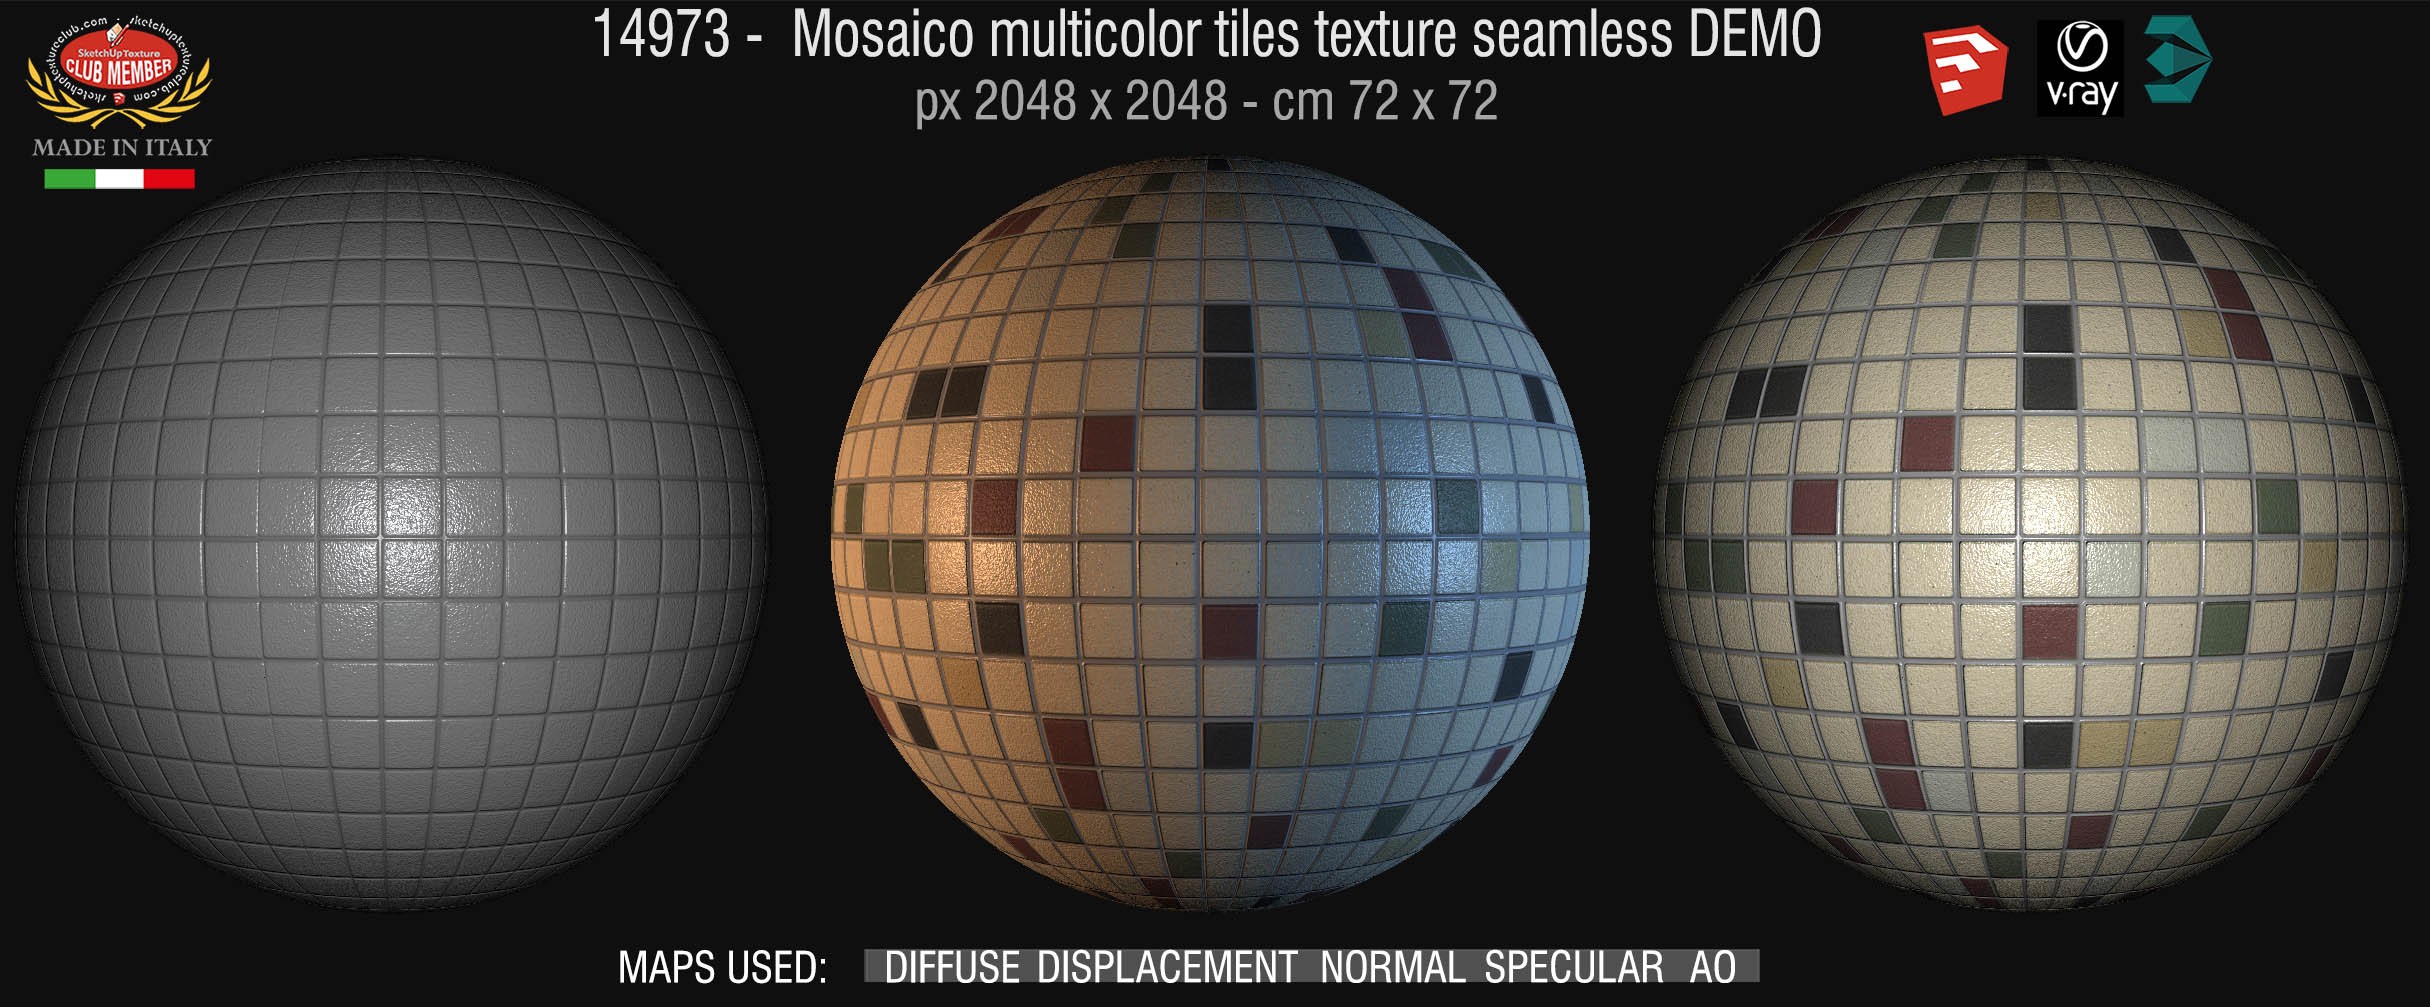 14973 Mosaico multicolor tiles texture seamless + maps DEMO